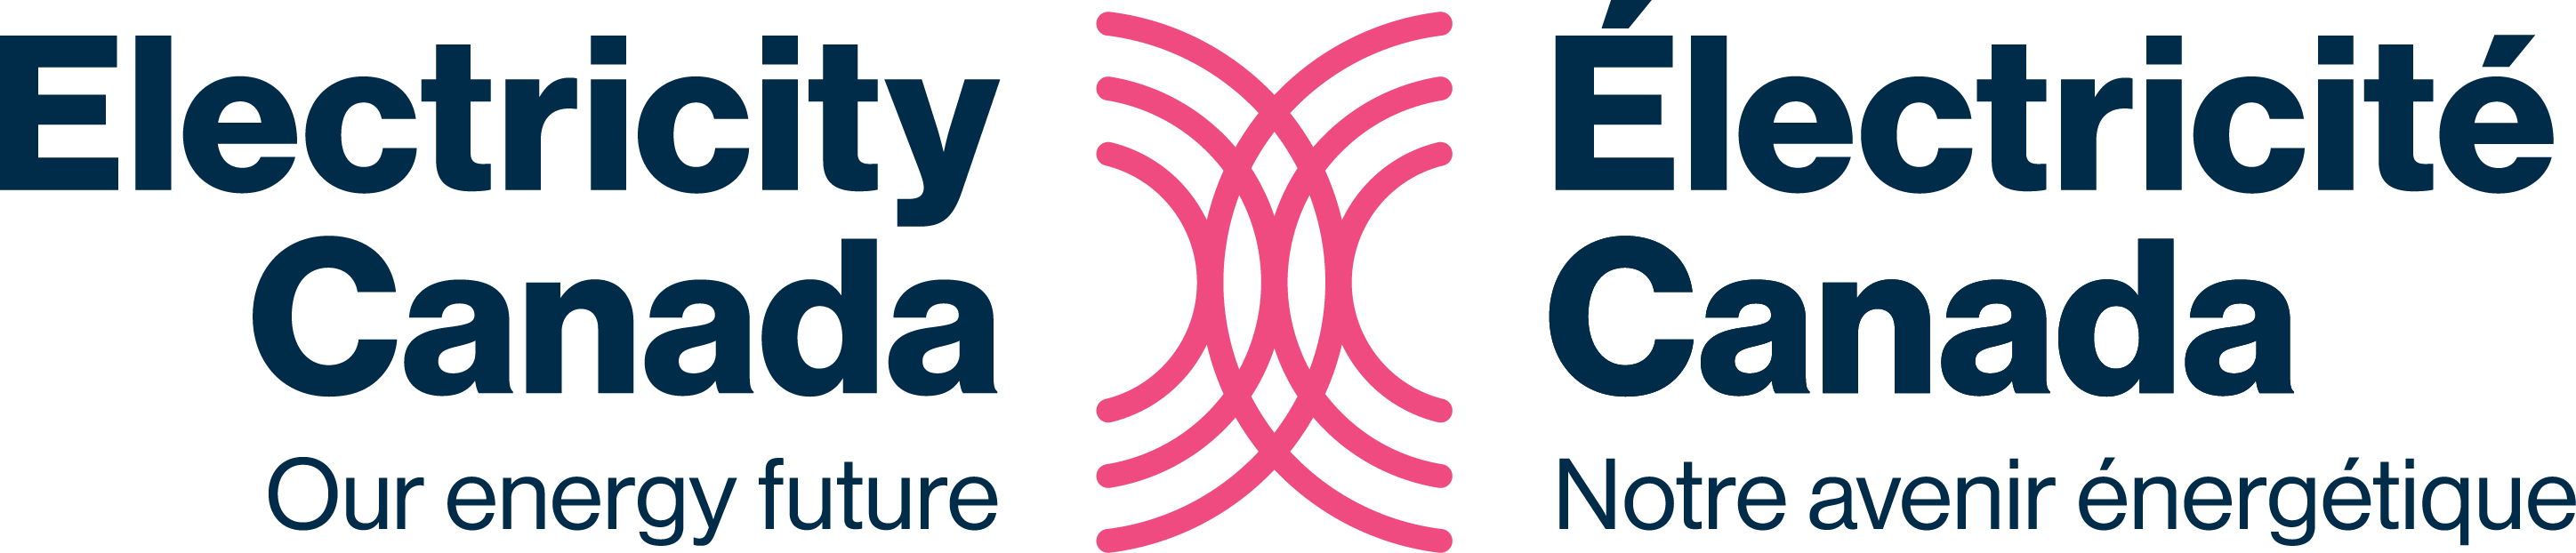 Electricity Canada logo